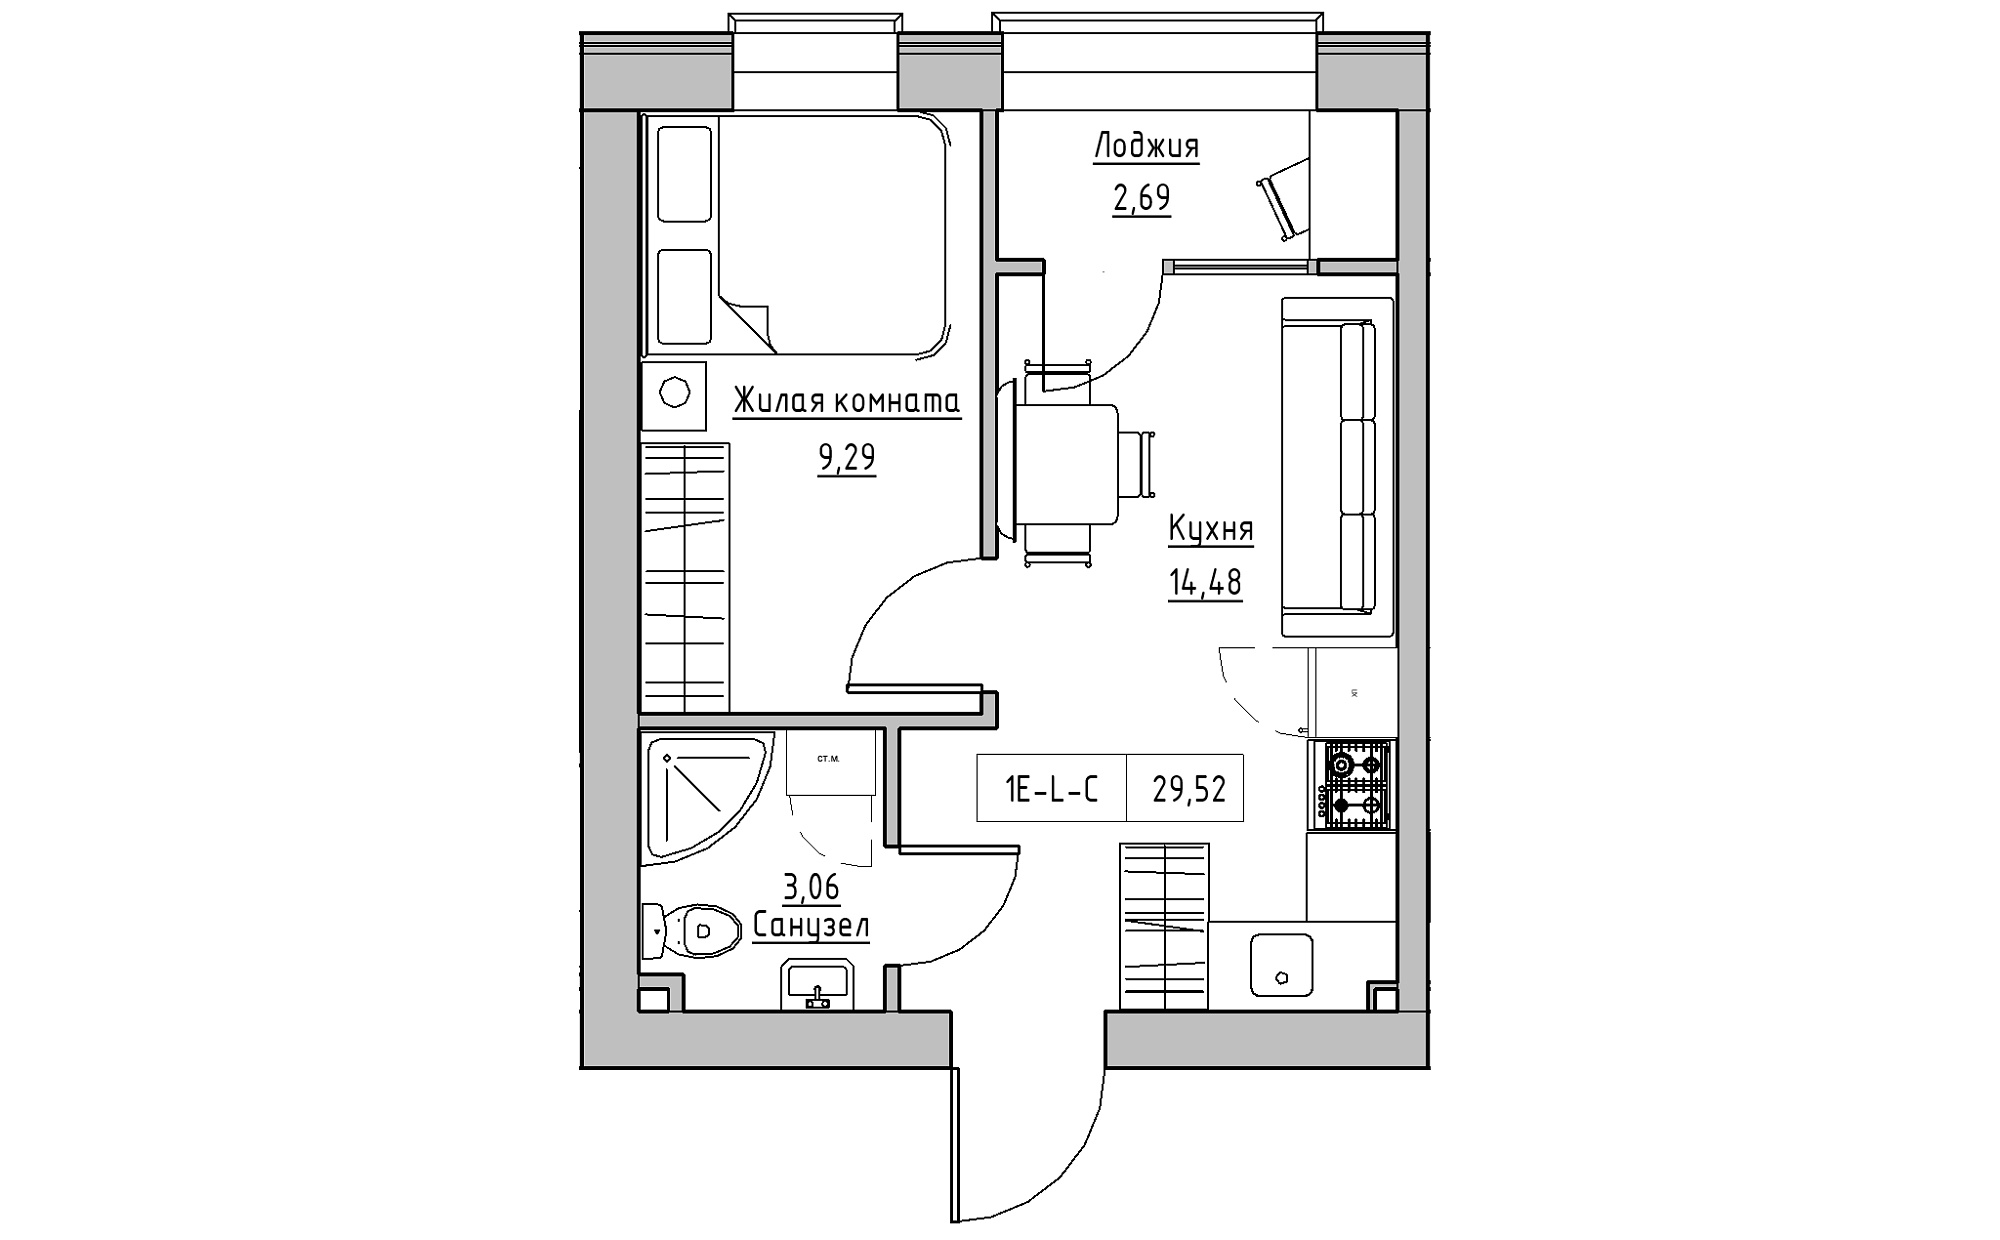 Planning 1-rm flats area 29.52m2, KS-022-01/0006.